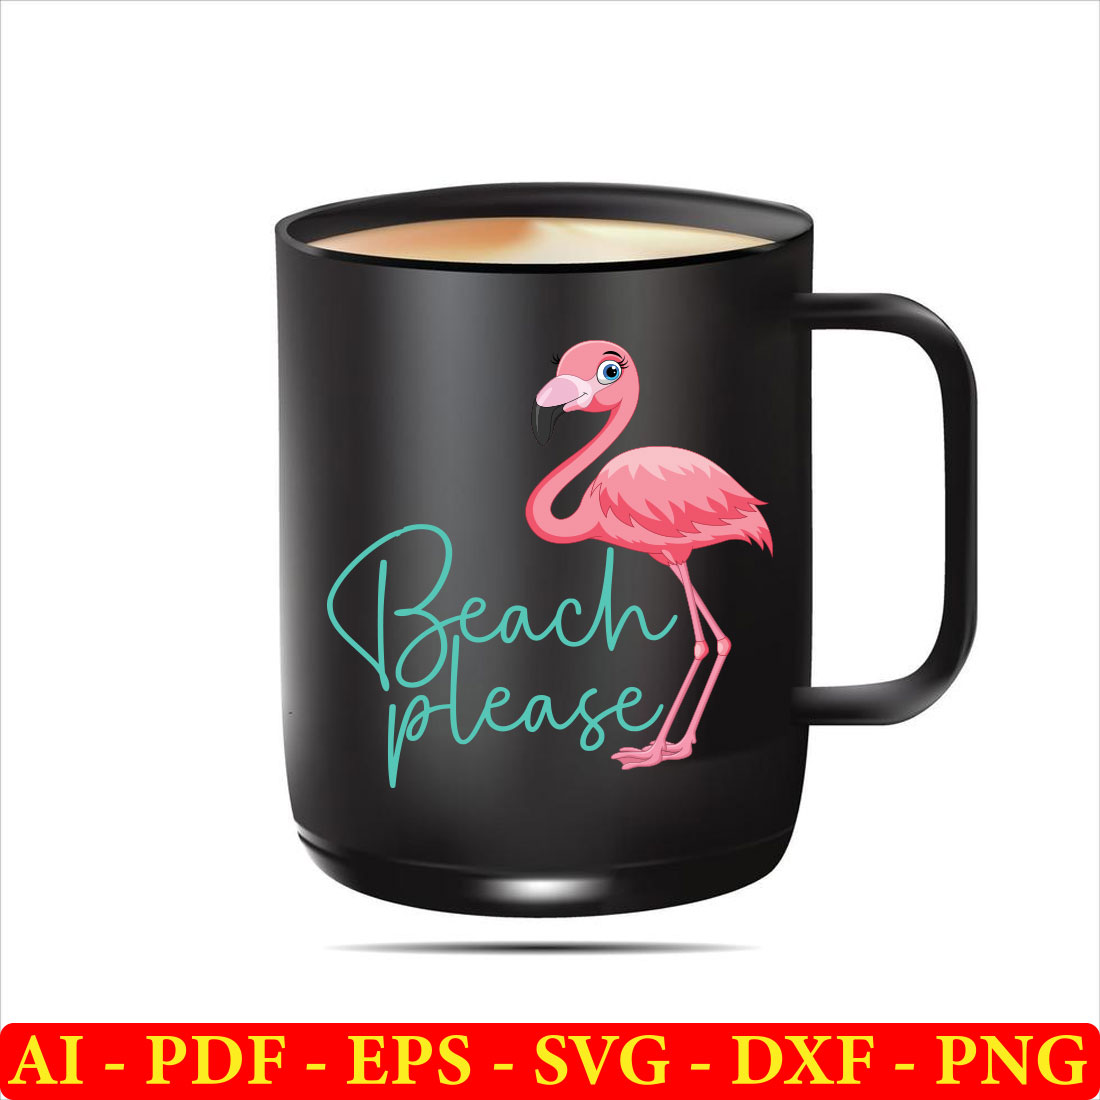 Black coffee mug with a pink flamingo on it.